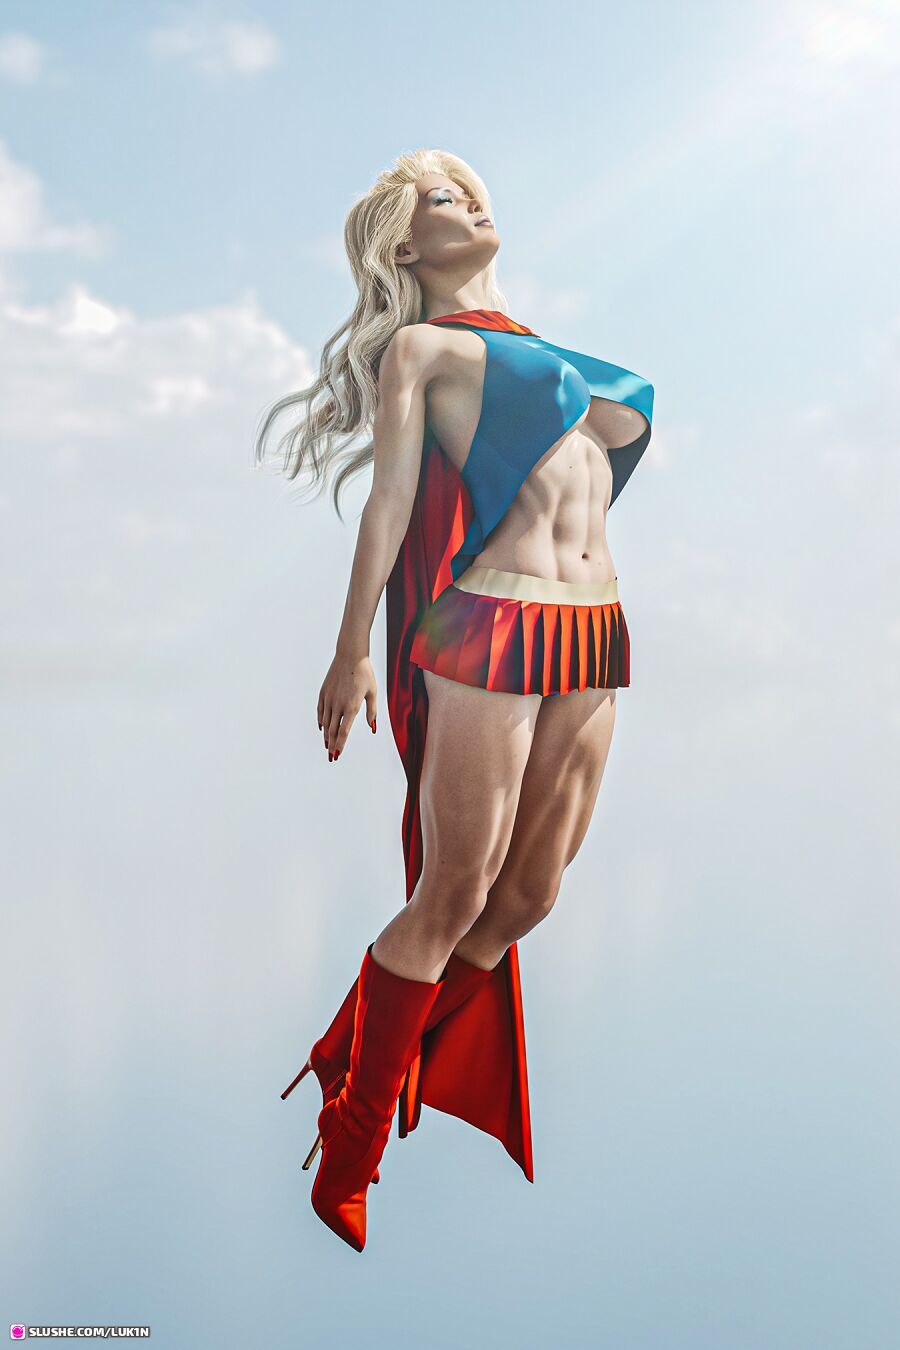 Slushe - Galleries - Supergirl - Flying high